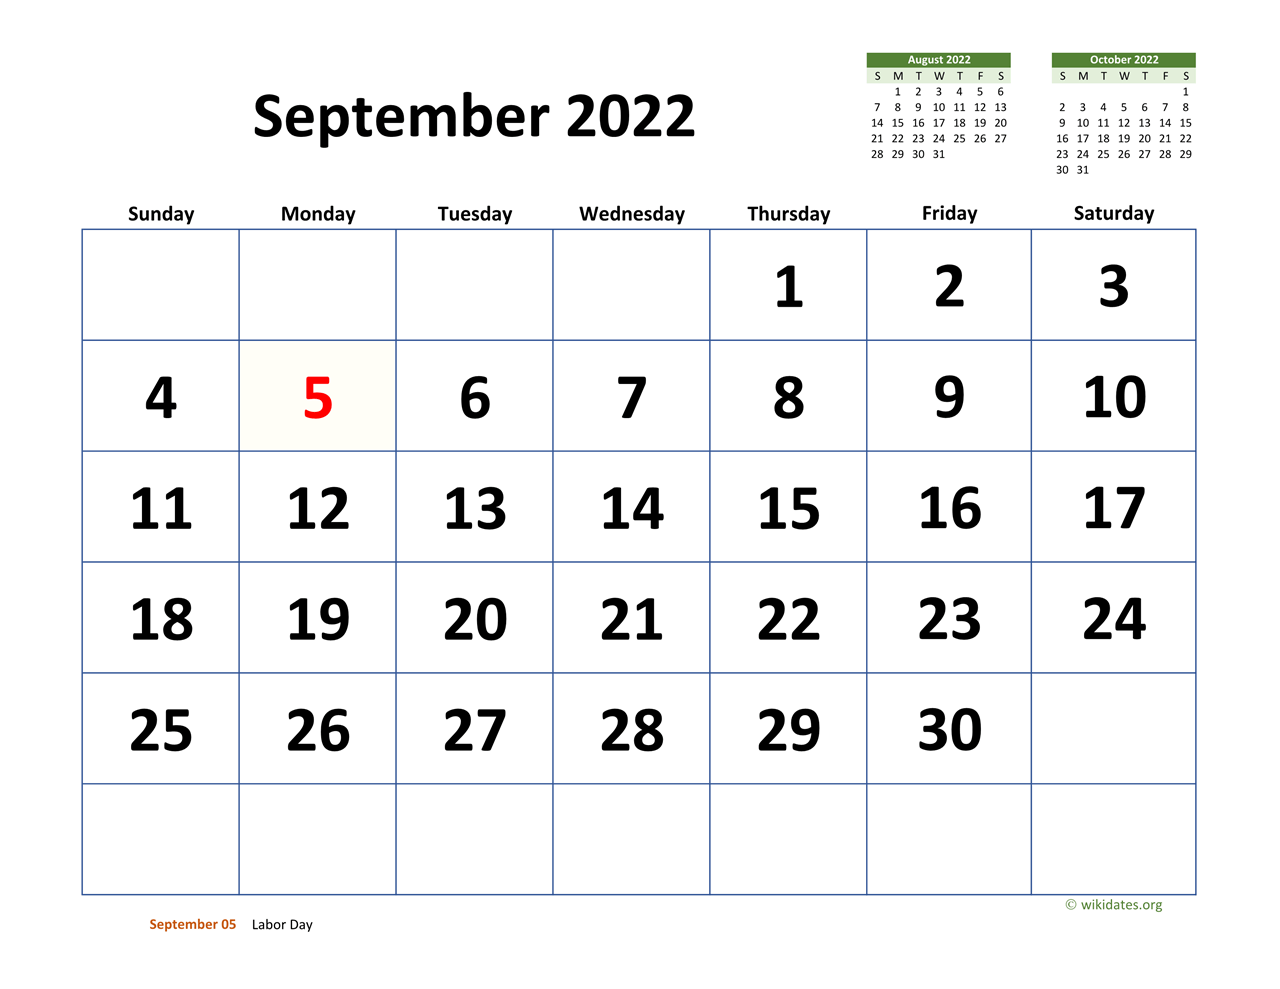 Download September 2022 Calendar September 2022 Calendar With Extra-Large Dates | Wikidates.org